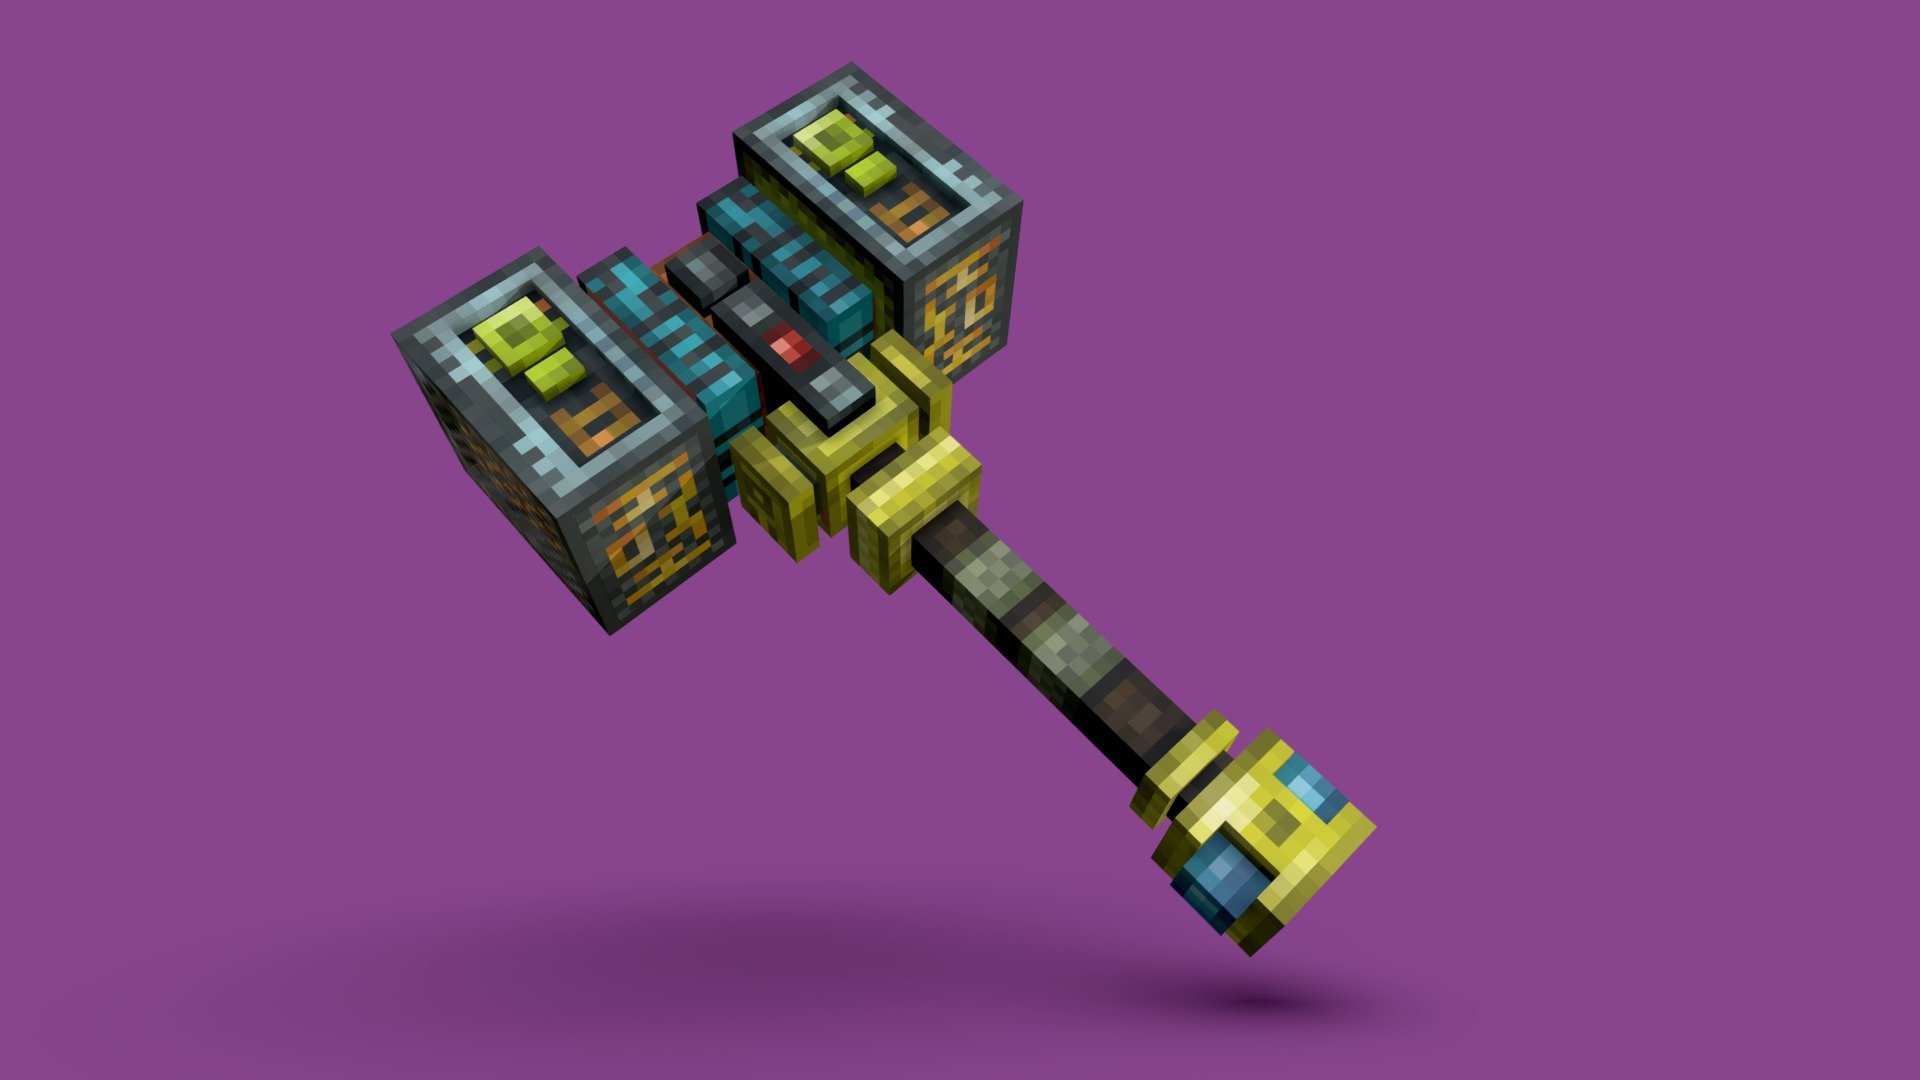 Bliss hammer made with blockbench - Bliss Hammer - 3D model by Wacky (@wackyblocks) 3d model